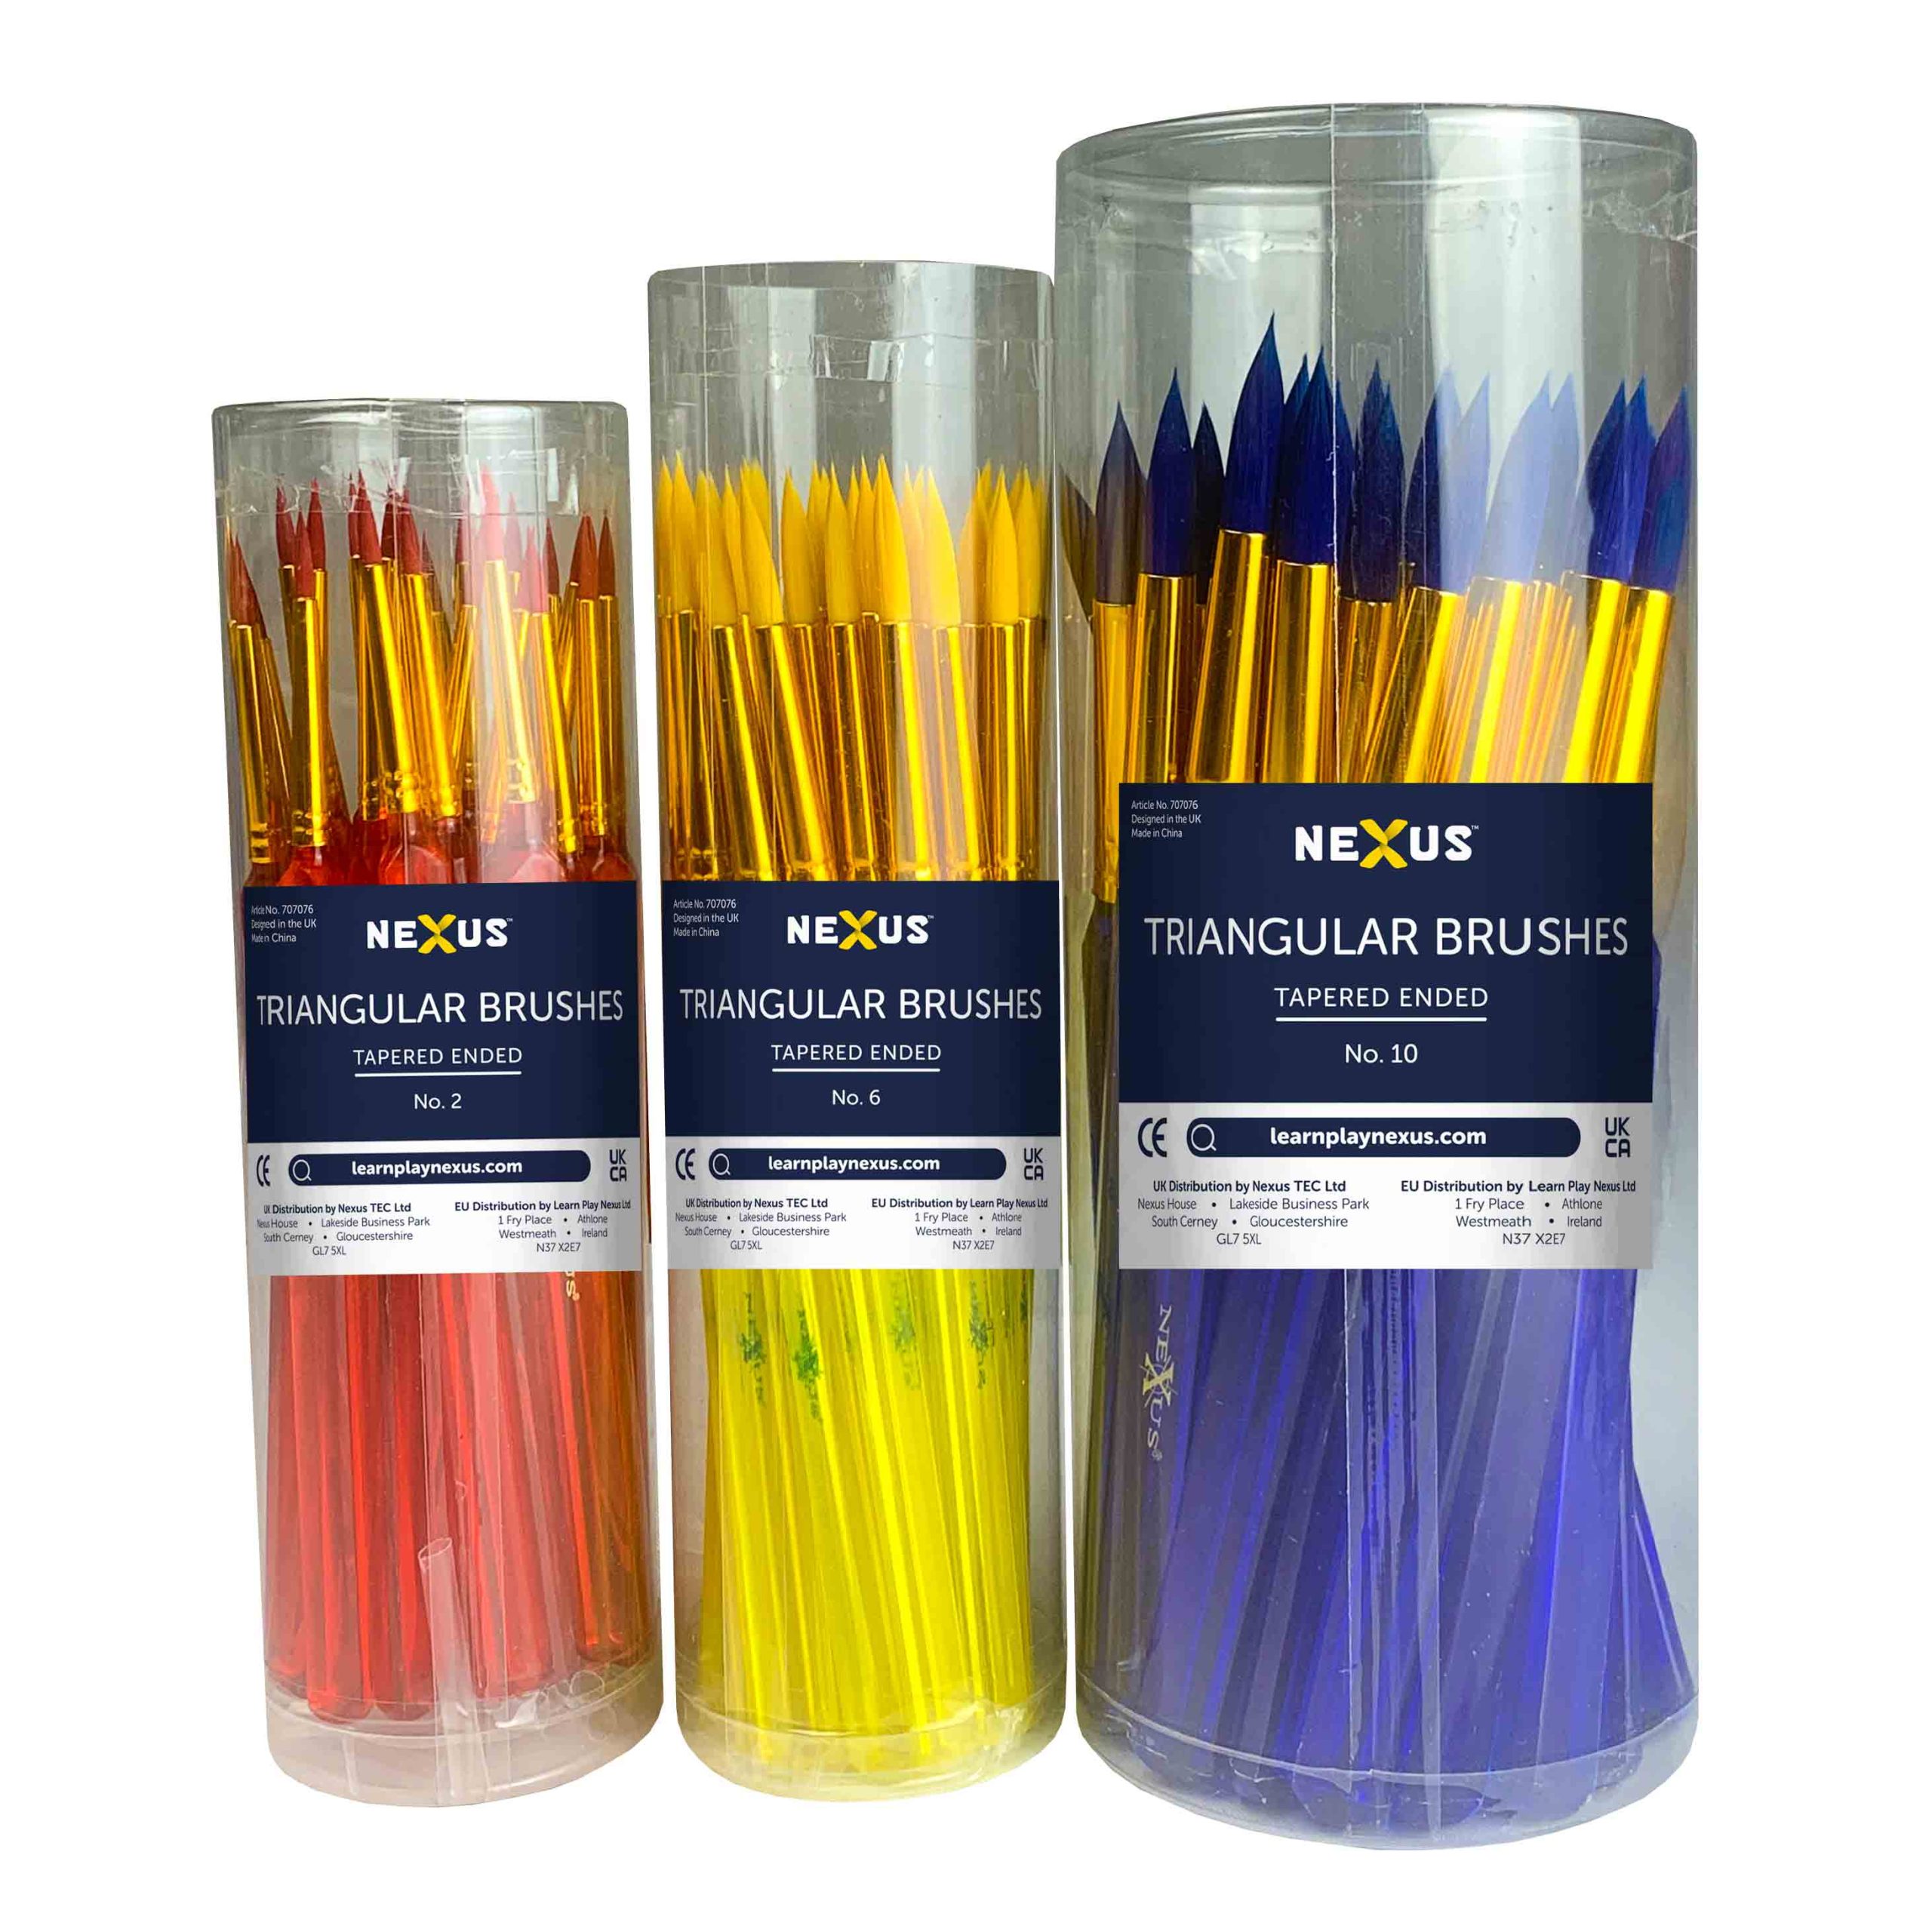 Nexus Triangular Paint Brushes (Tapered Ended) 30 brushes x 3 sizes